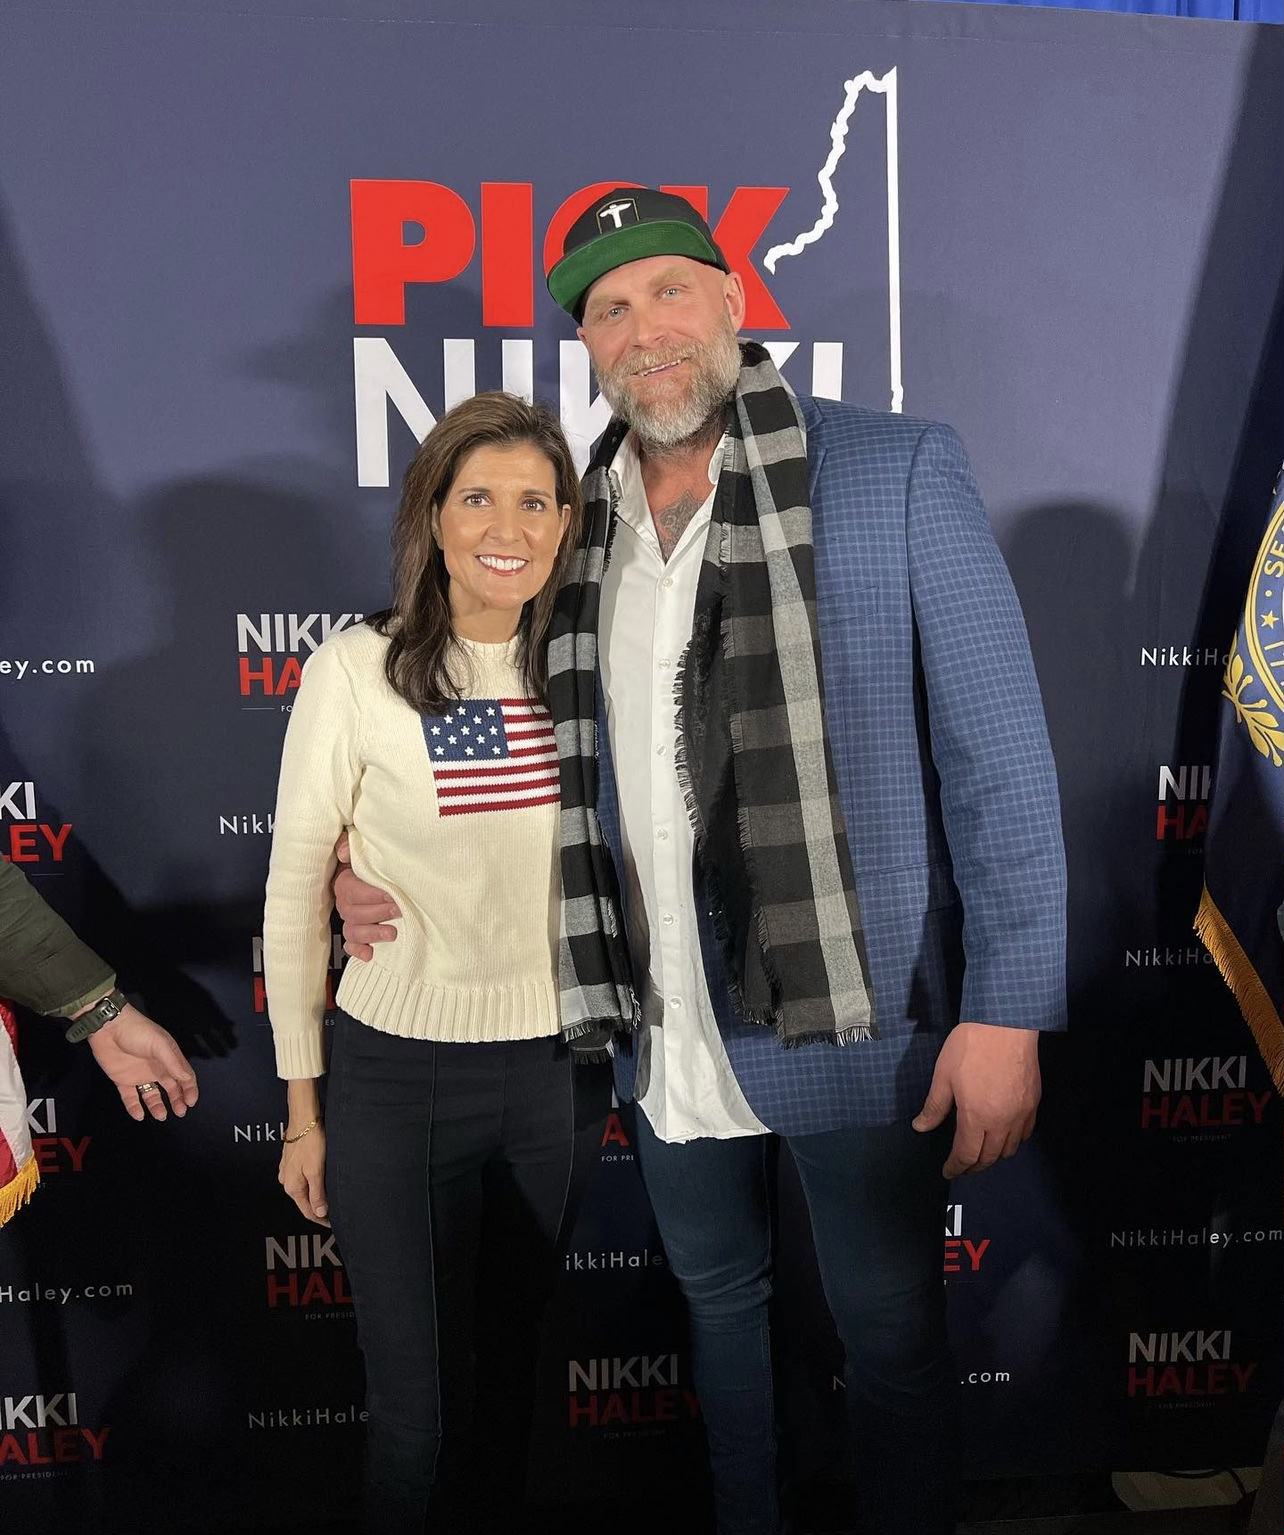 NFL legend & Cannabis Activist Kyle Turley blitzes presidential candidates Nikki Haley & Dean Phillips in New Hampshire primaries